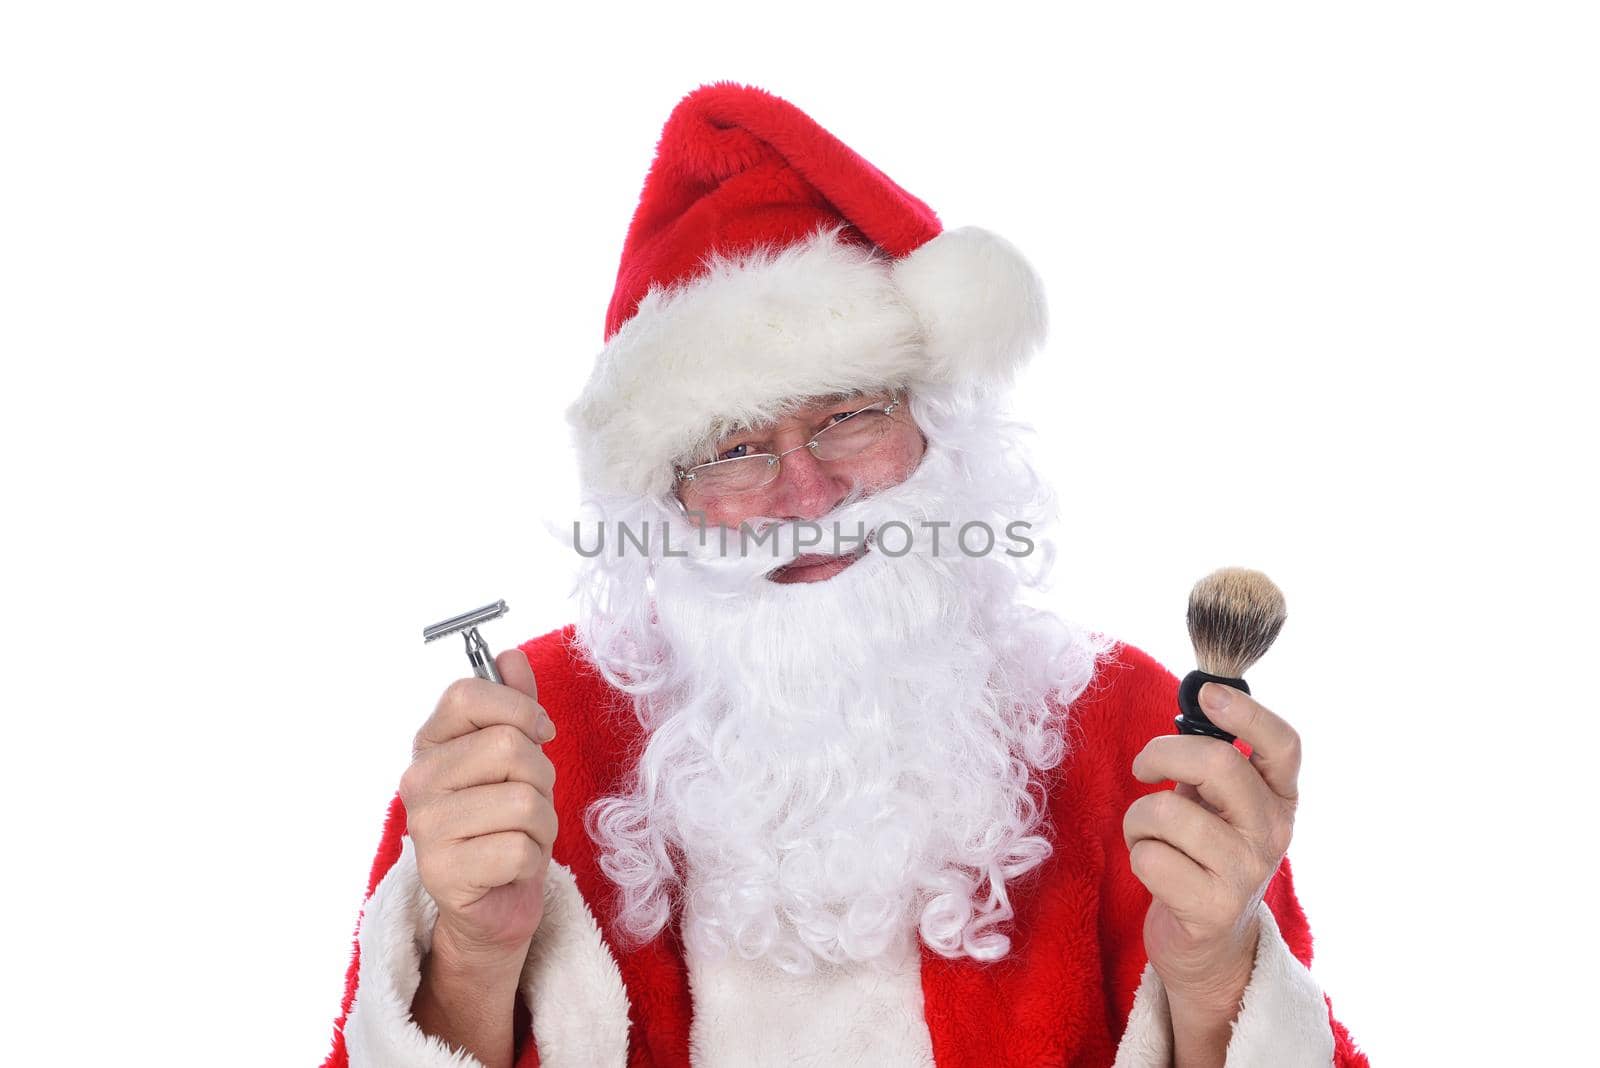 Closeup of Santa Claus holding a razor and shaving brush, contemplating cutting off his beard.